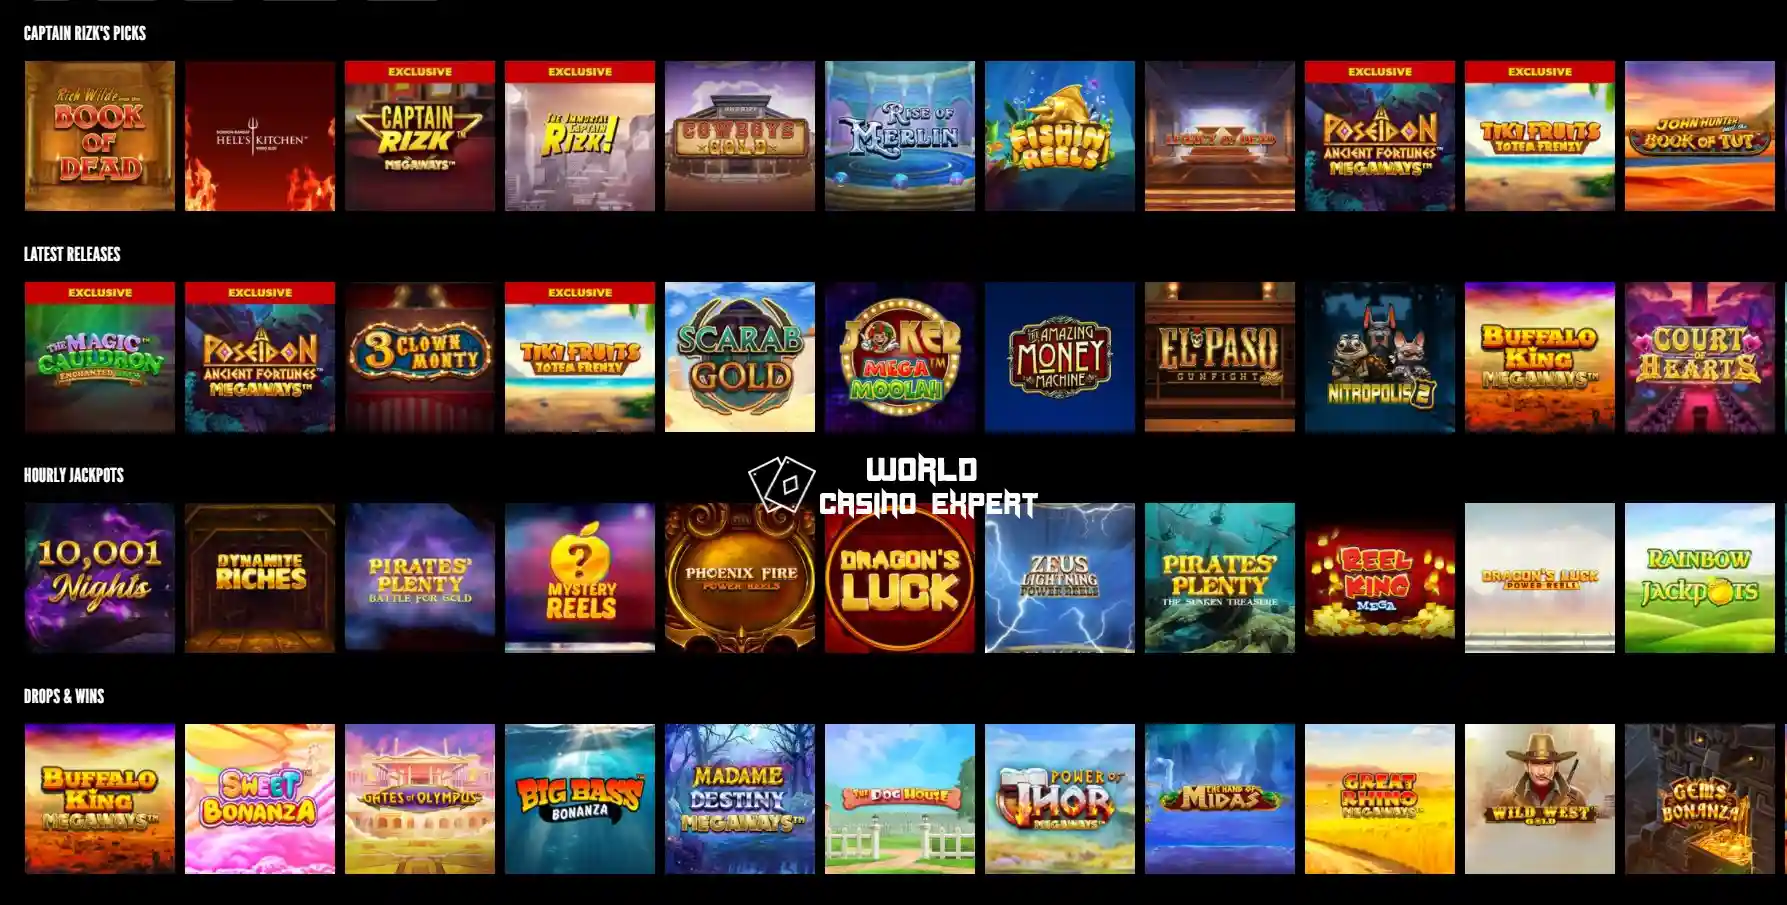 Games in Online Casino Rizk | World Casino Expert